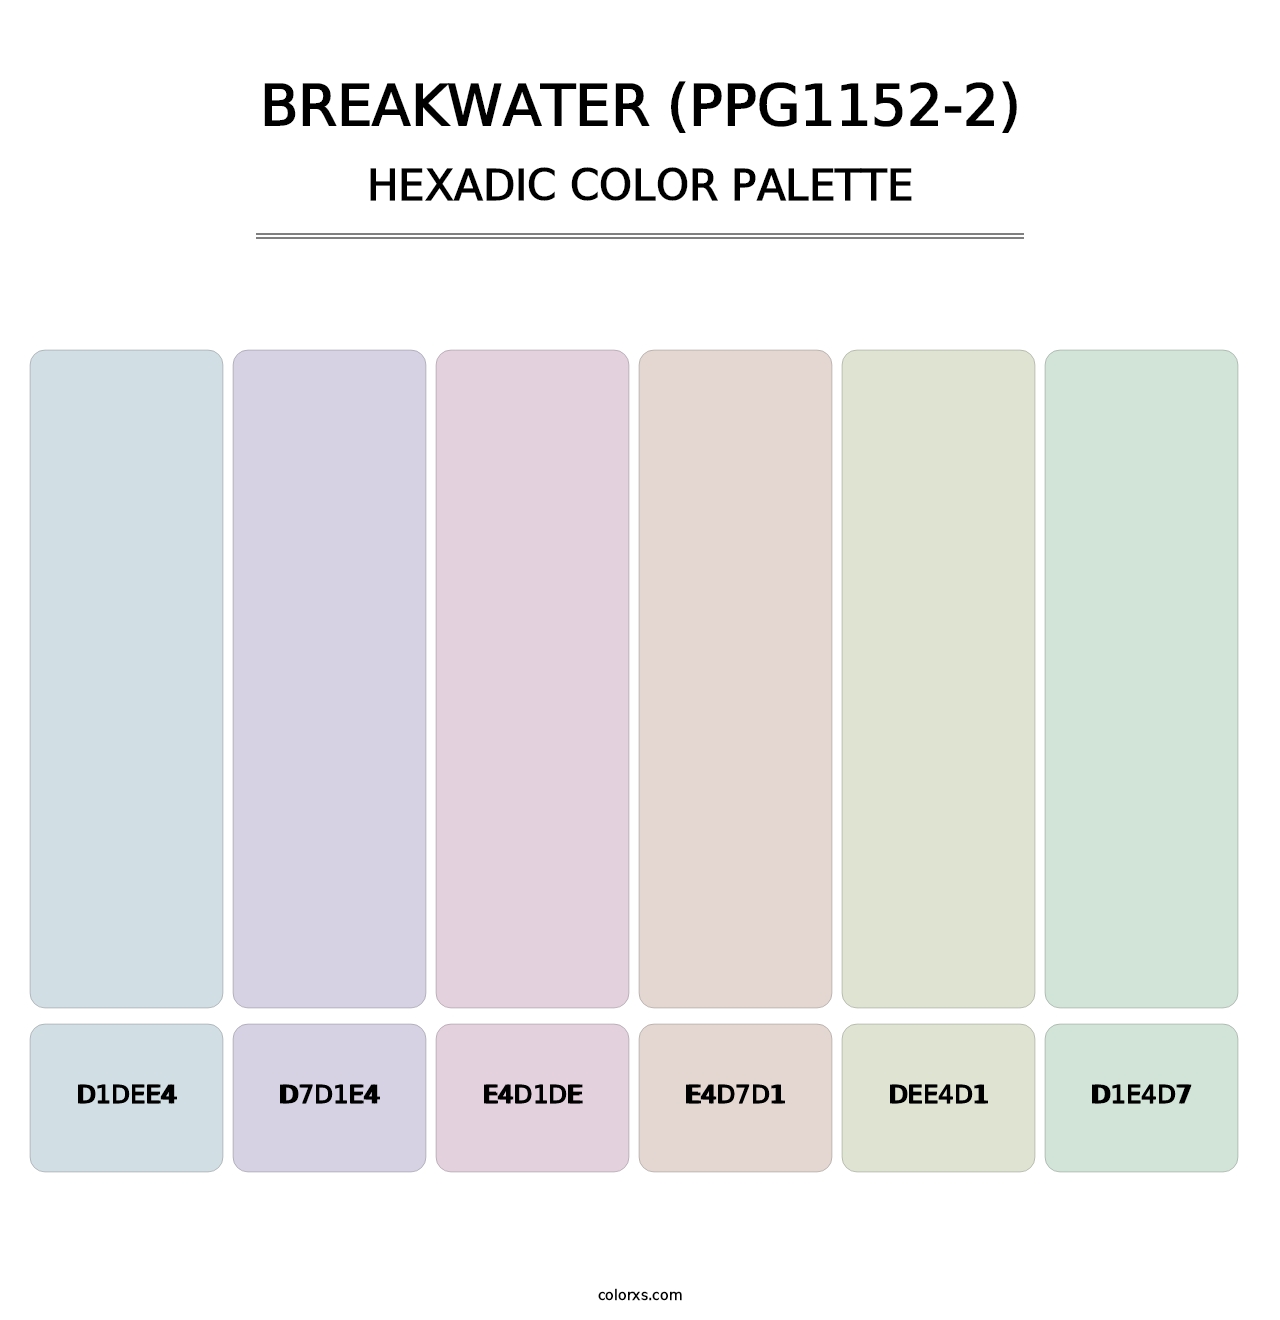 Breakwater (PPG1152-2) - Hexadic Color Palette